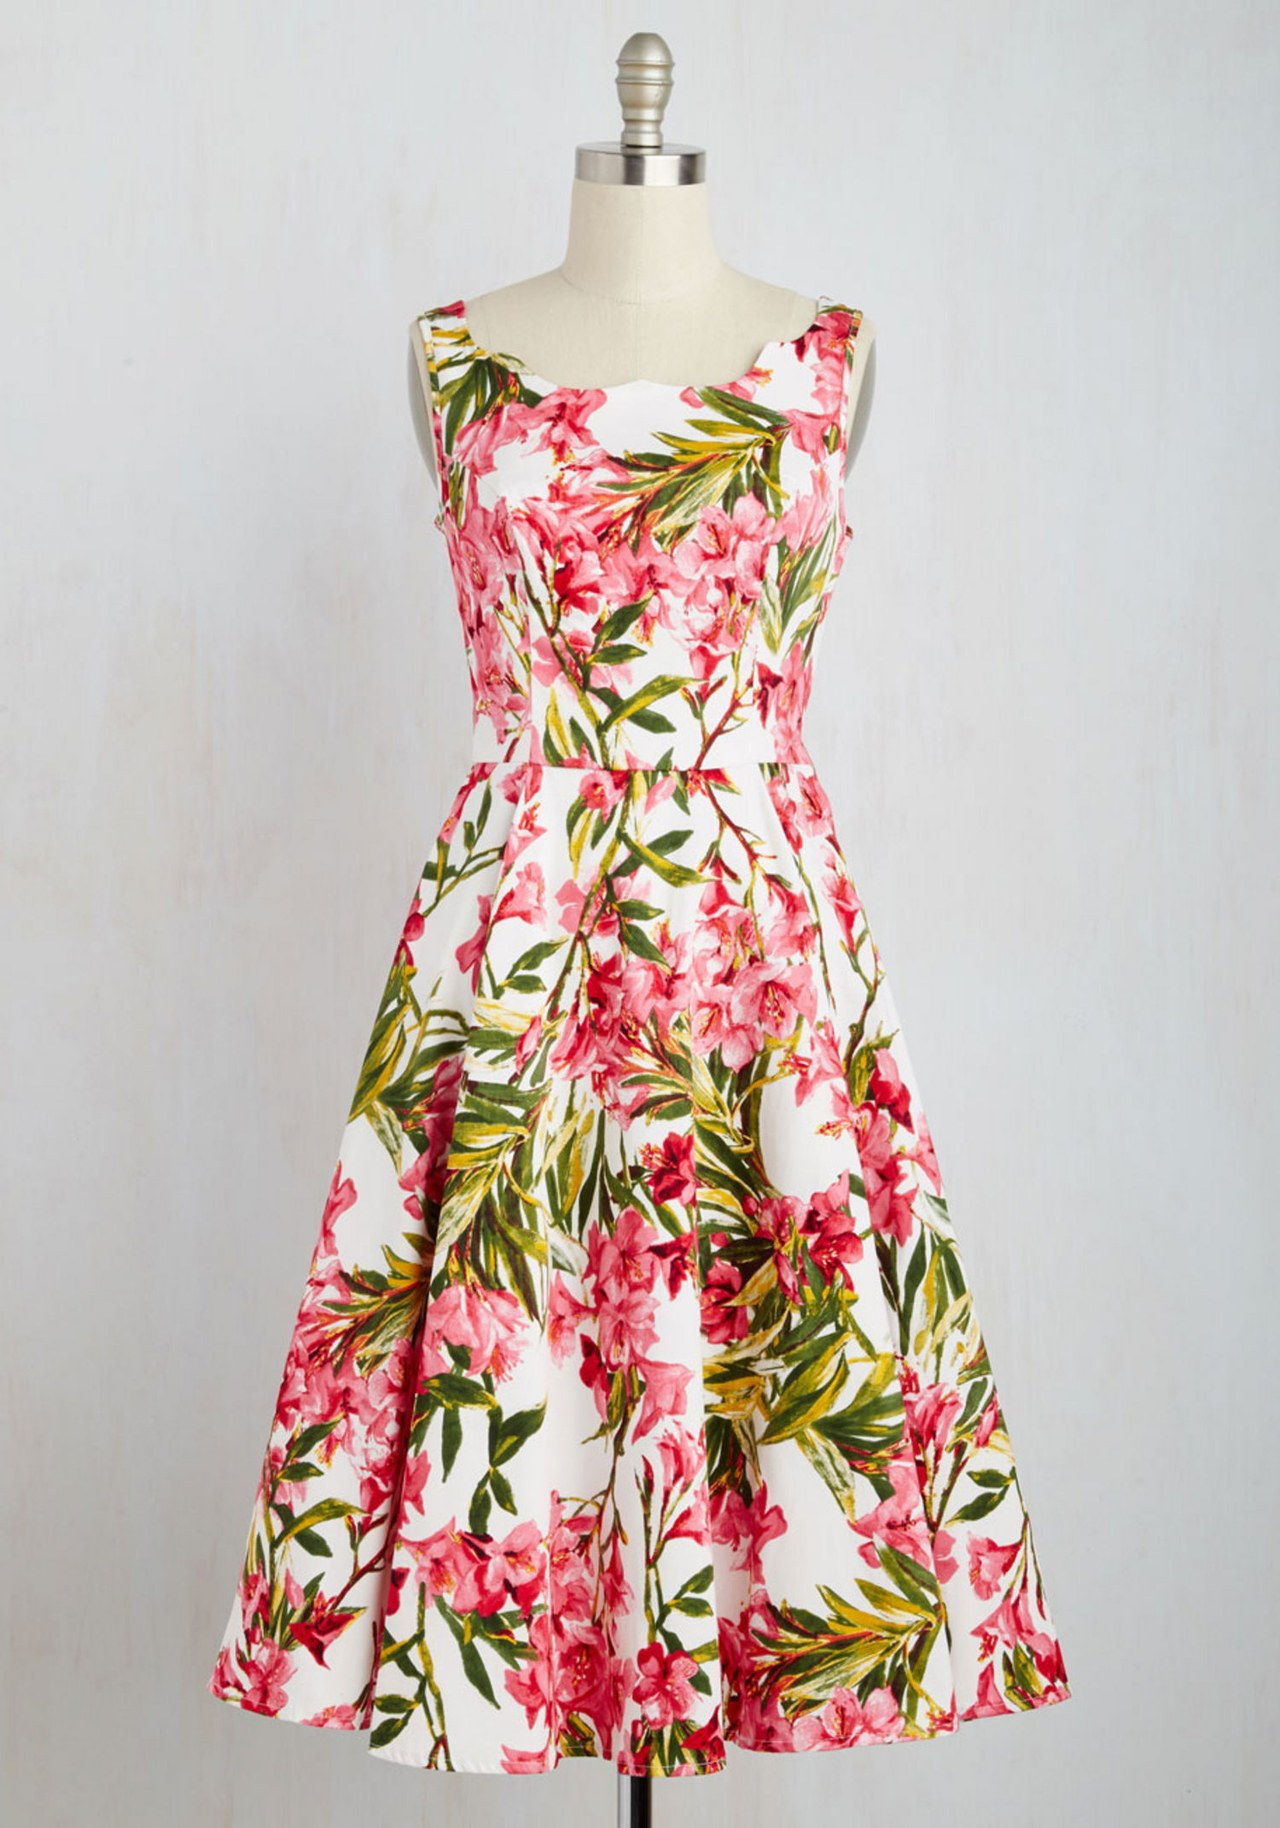 6 floral bridesmaid dresses 0127 courtesy